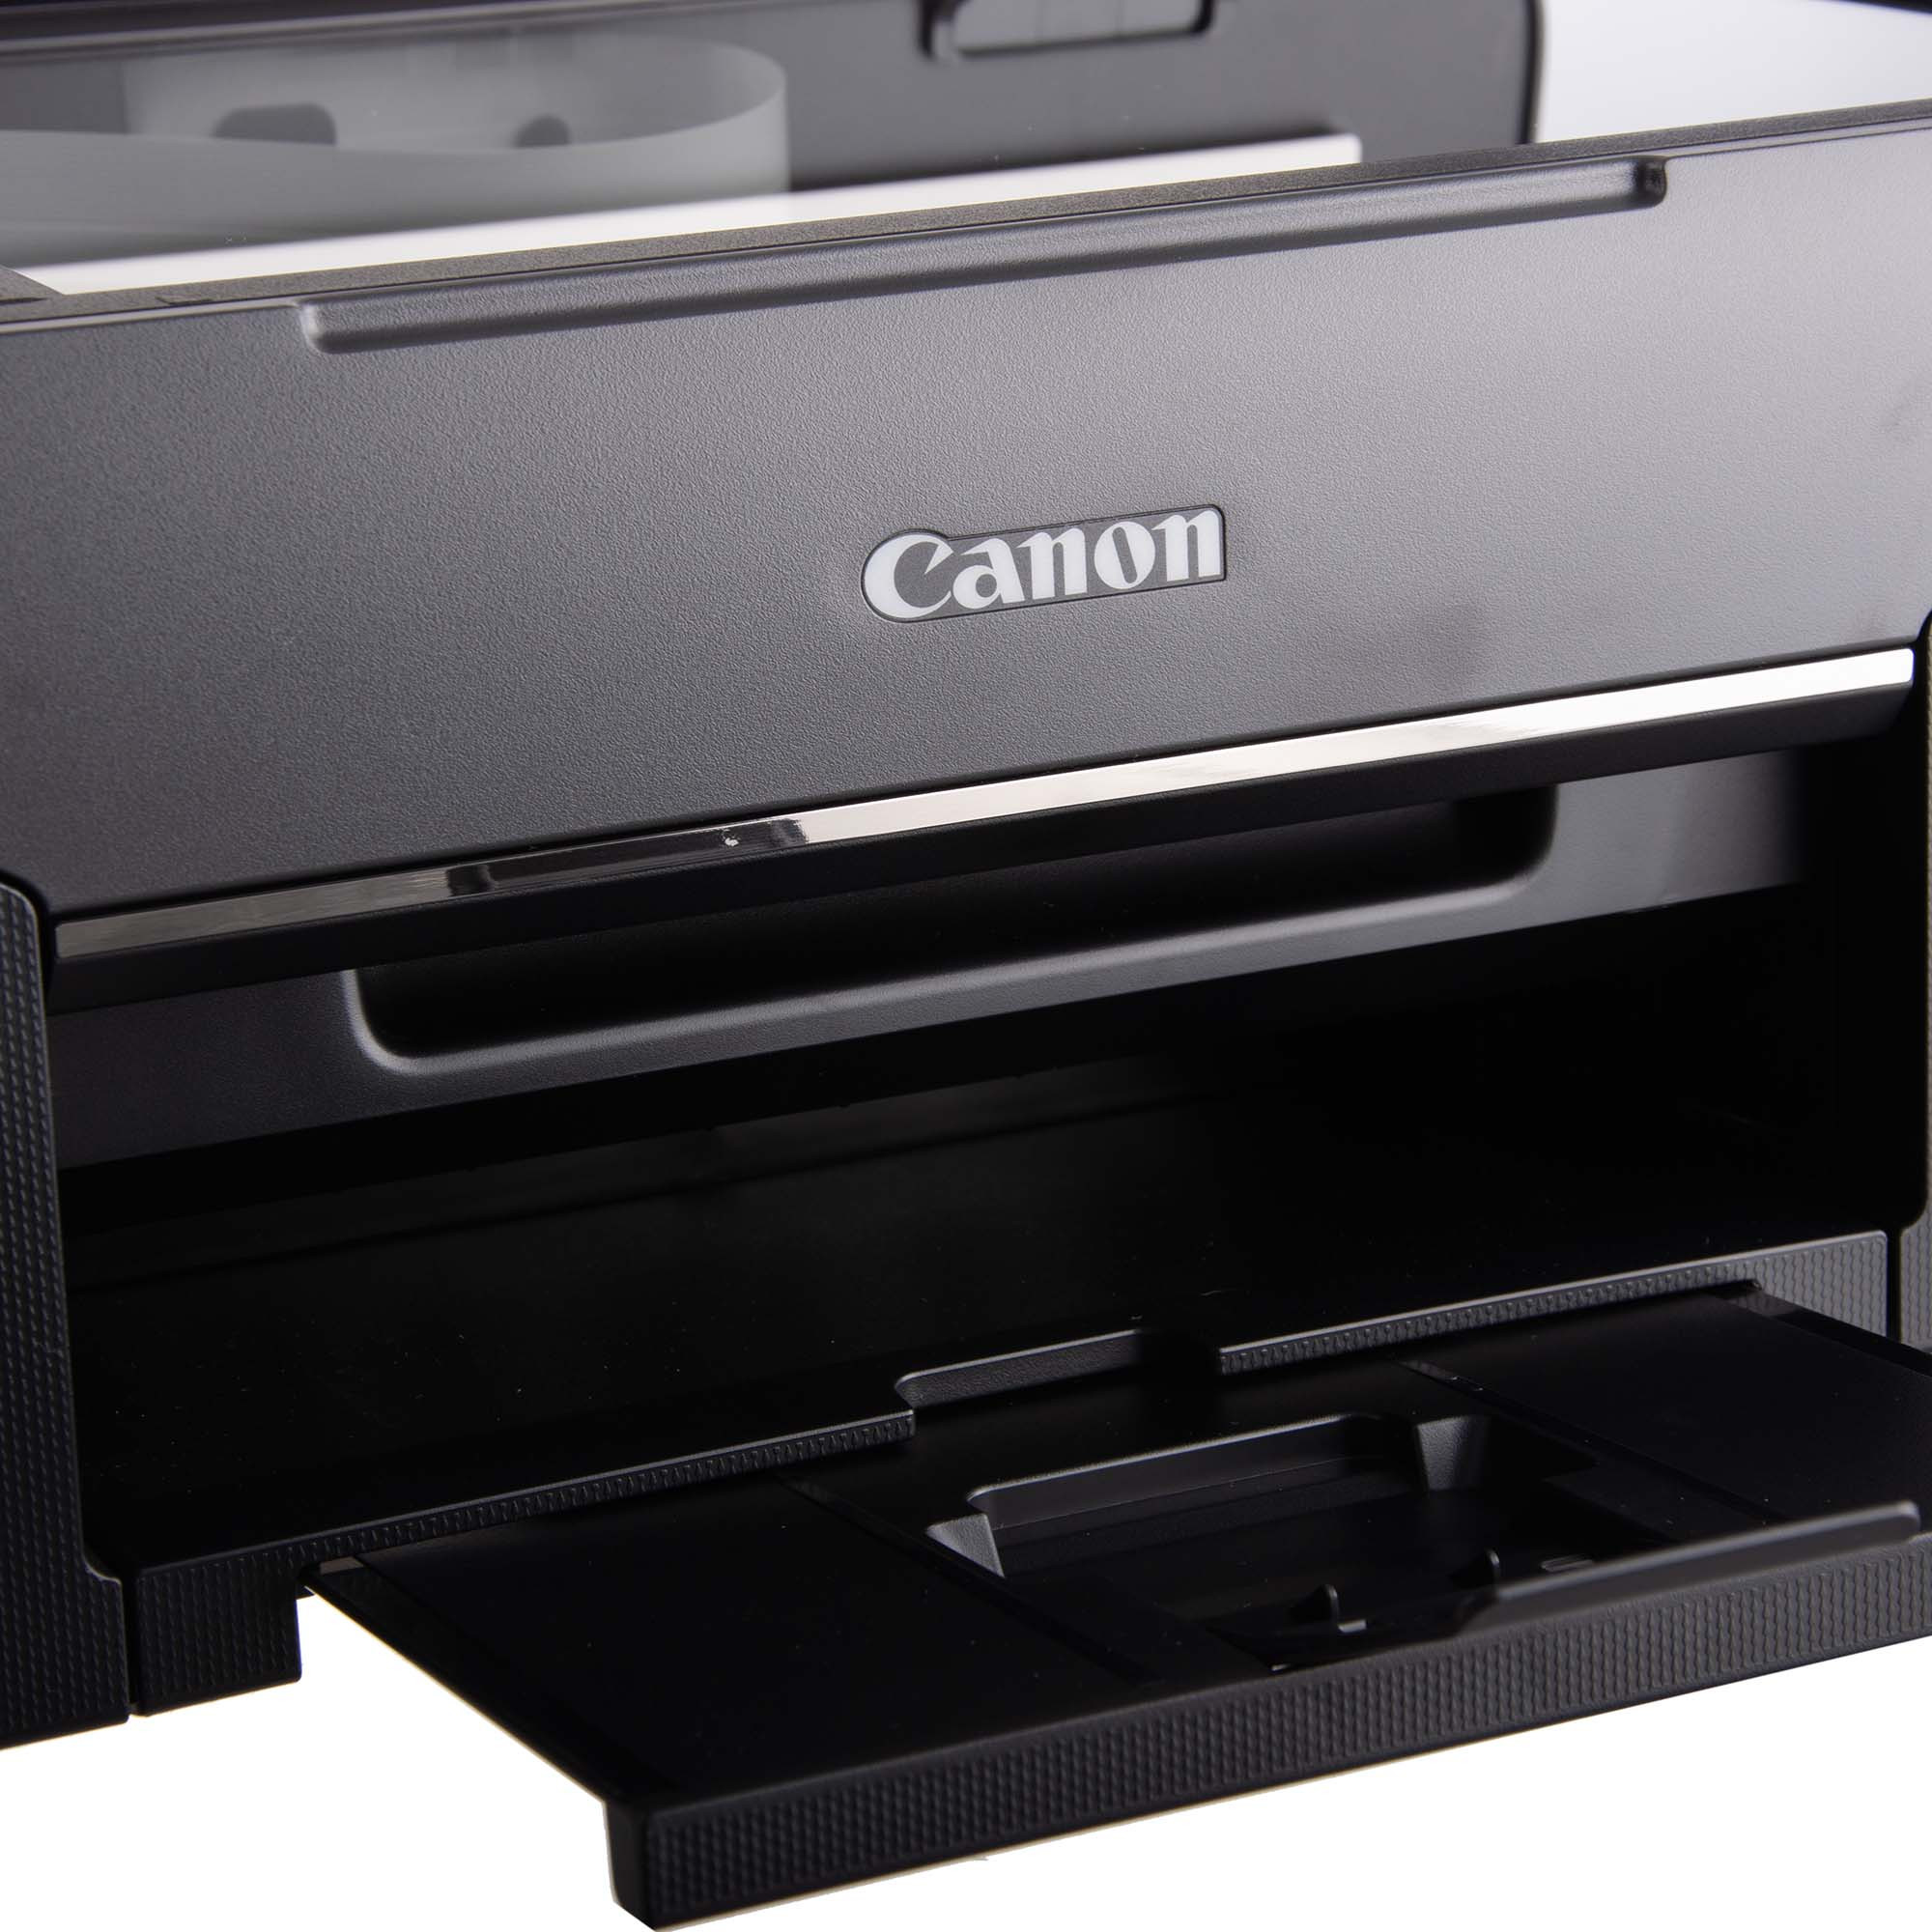 Impresora Multifuncional CANON PIXMA G3160 AZUL WIFI